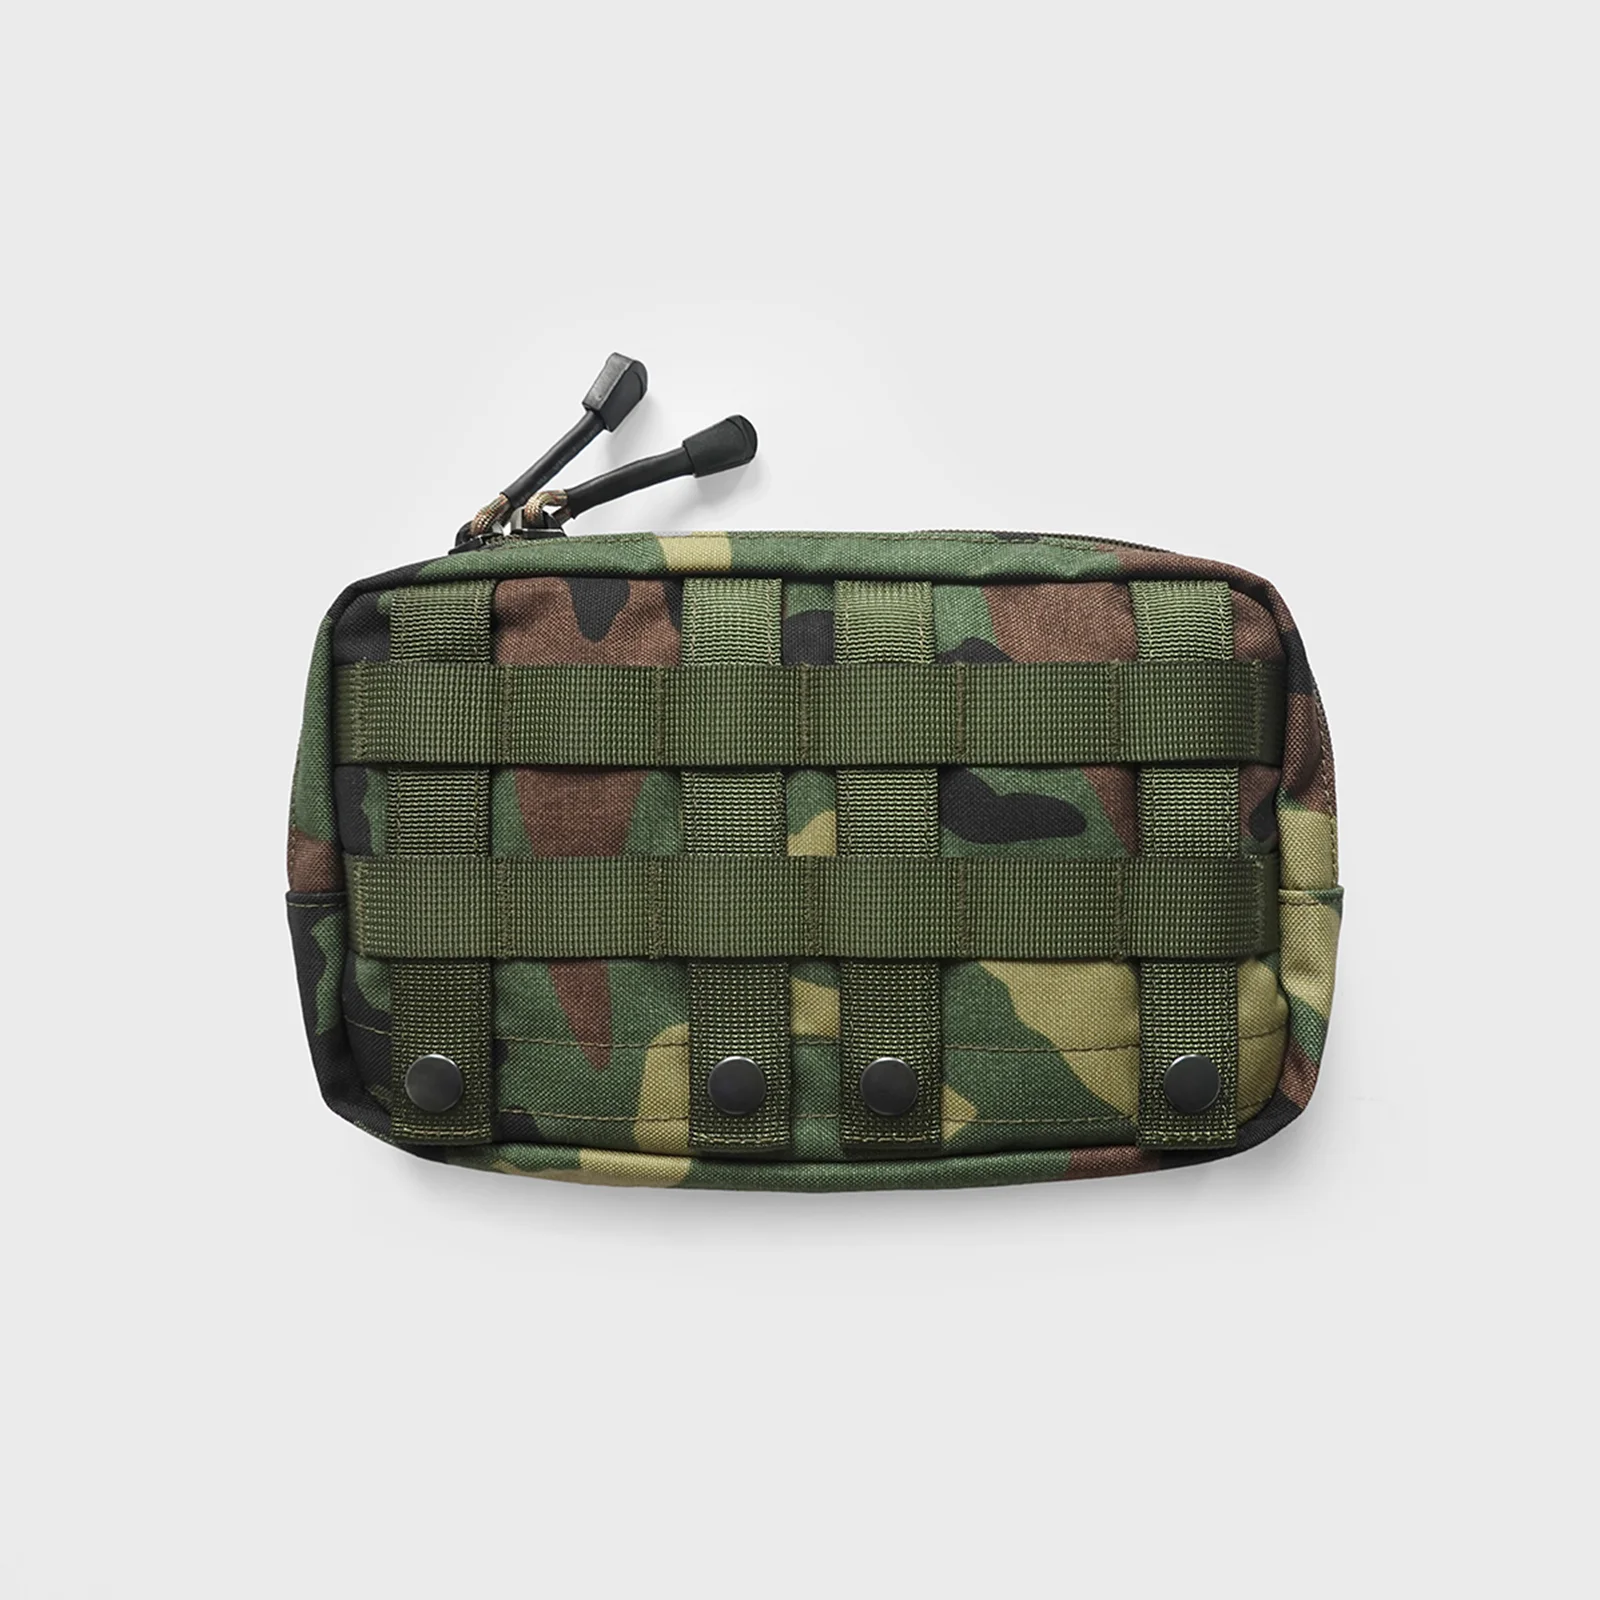 Taktički ruksak MAUHOSO 30L s тактическими torbama Molle, insignia YKK zatvarač UTX, 3-dan Velike Vojne Ulica torba 5